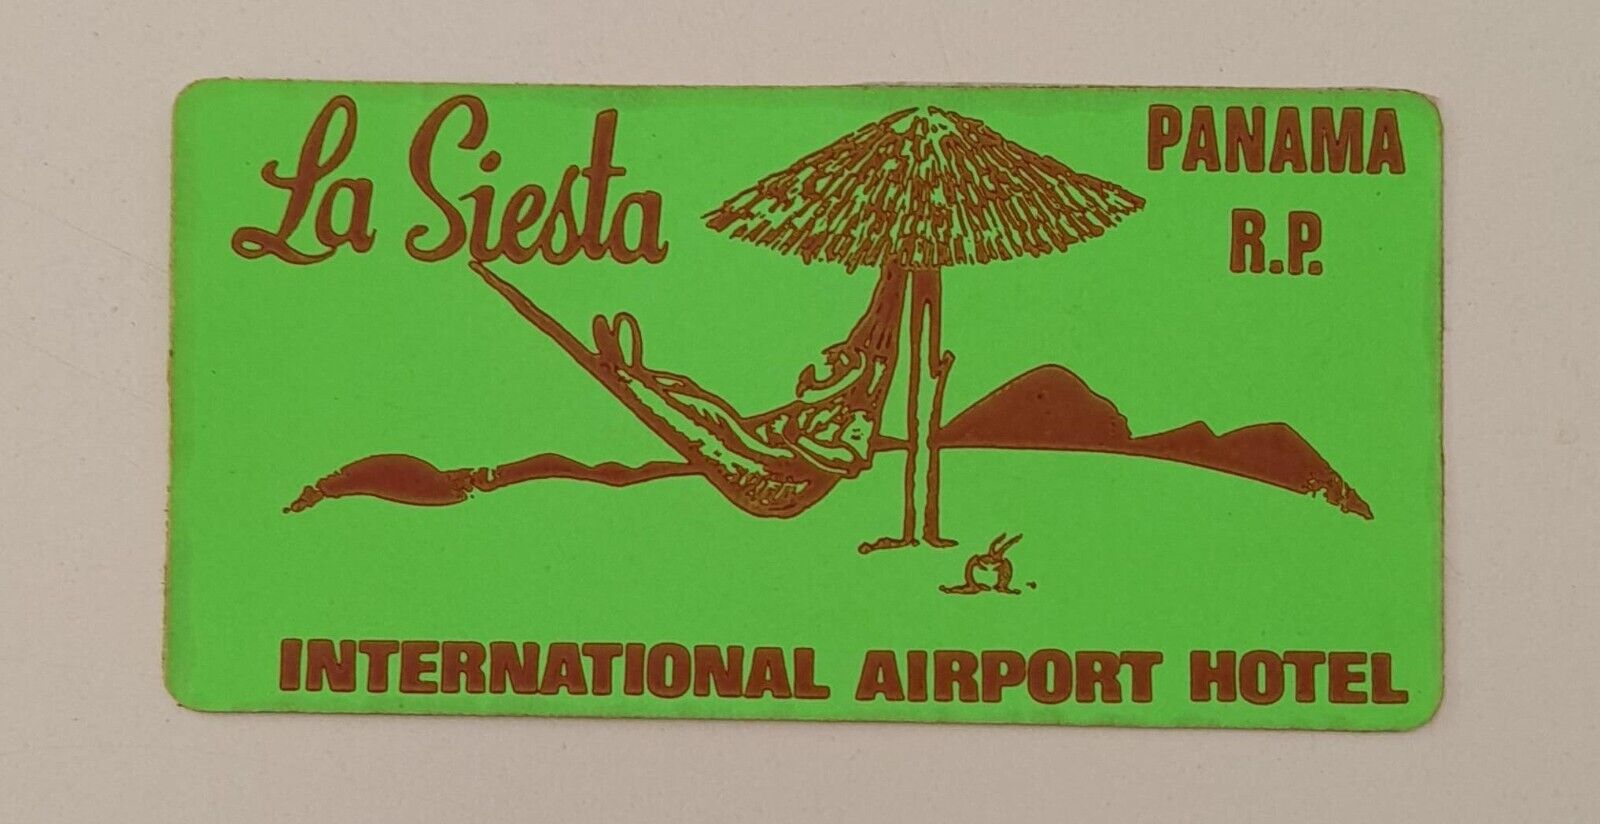 LA SIESTA INTERNACIONAL AIRPORT Hotel luggage label PANAMA R.P.